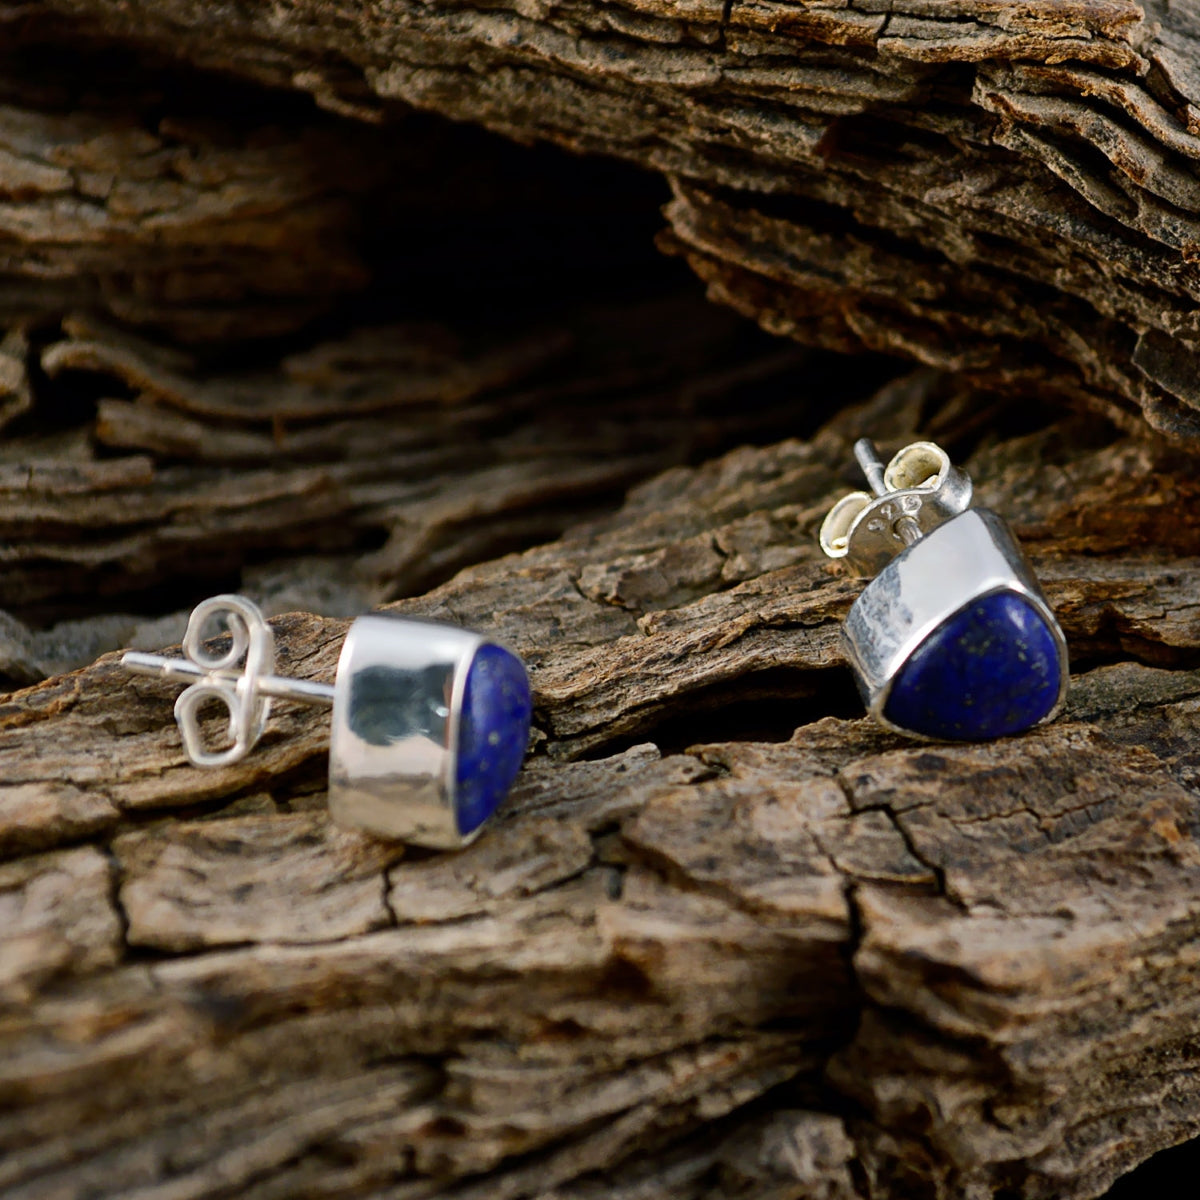 Riyo Natural Gemstone trillion Cabochon Nevy Blue Lapis Lazuli Silver Earrings gift for teachers day